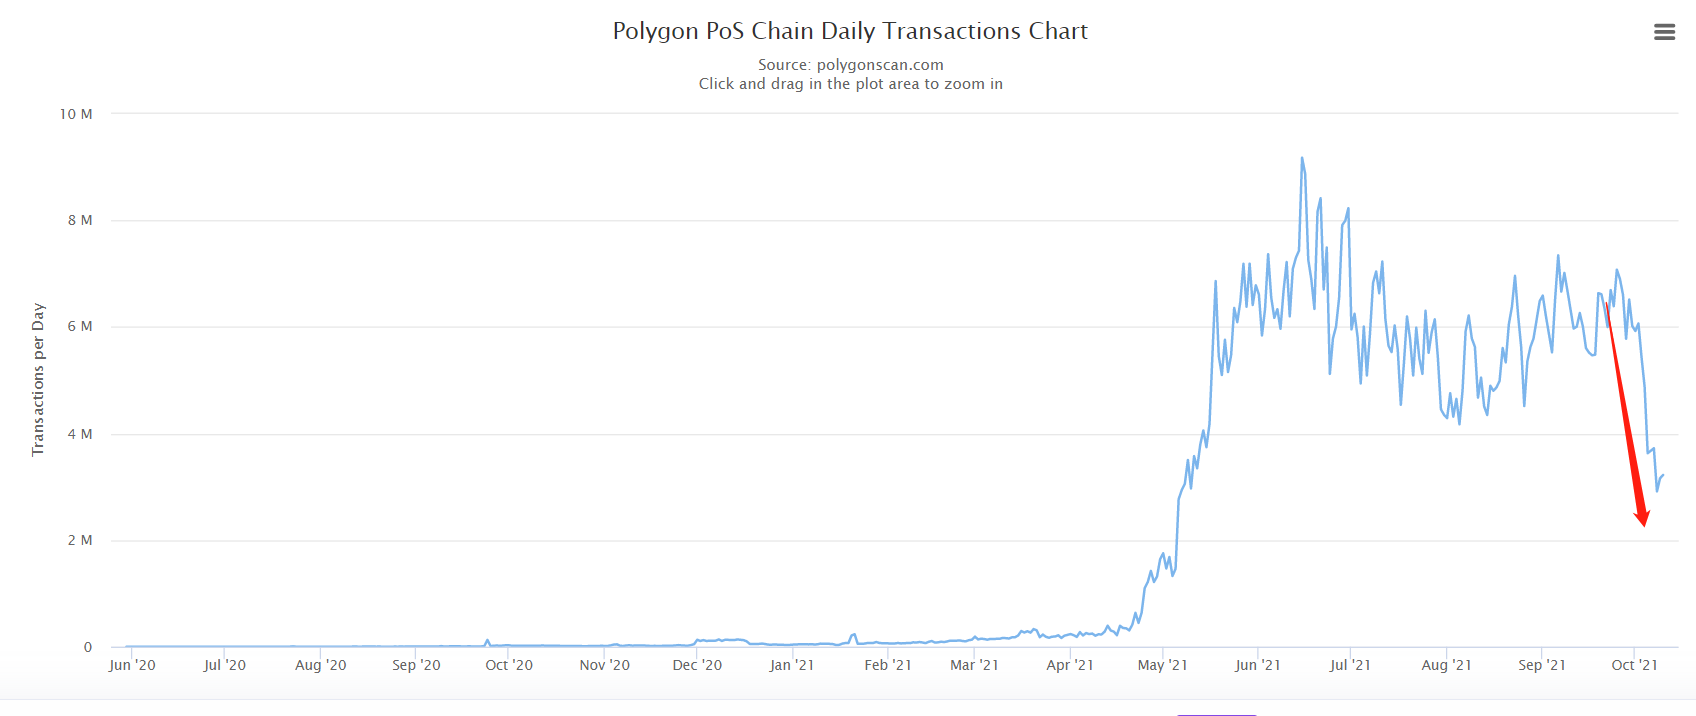 Polygon MATIC Daily Active Transactions - پس از افزایش 30 برابری کارمزد،حجم تراکنشهای روزانه Polygon پنجاه درصد کاهش می یابد